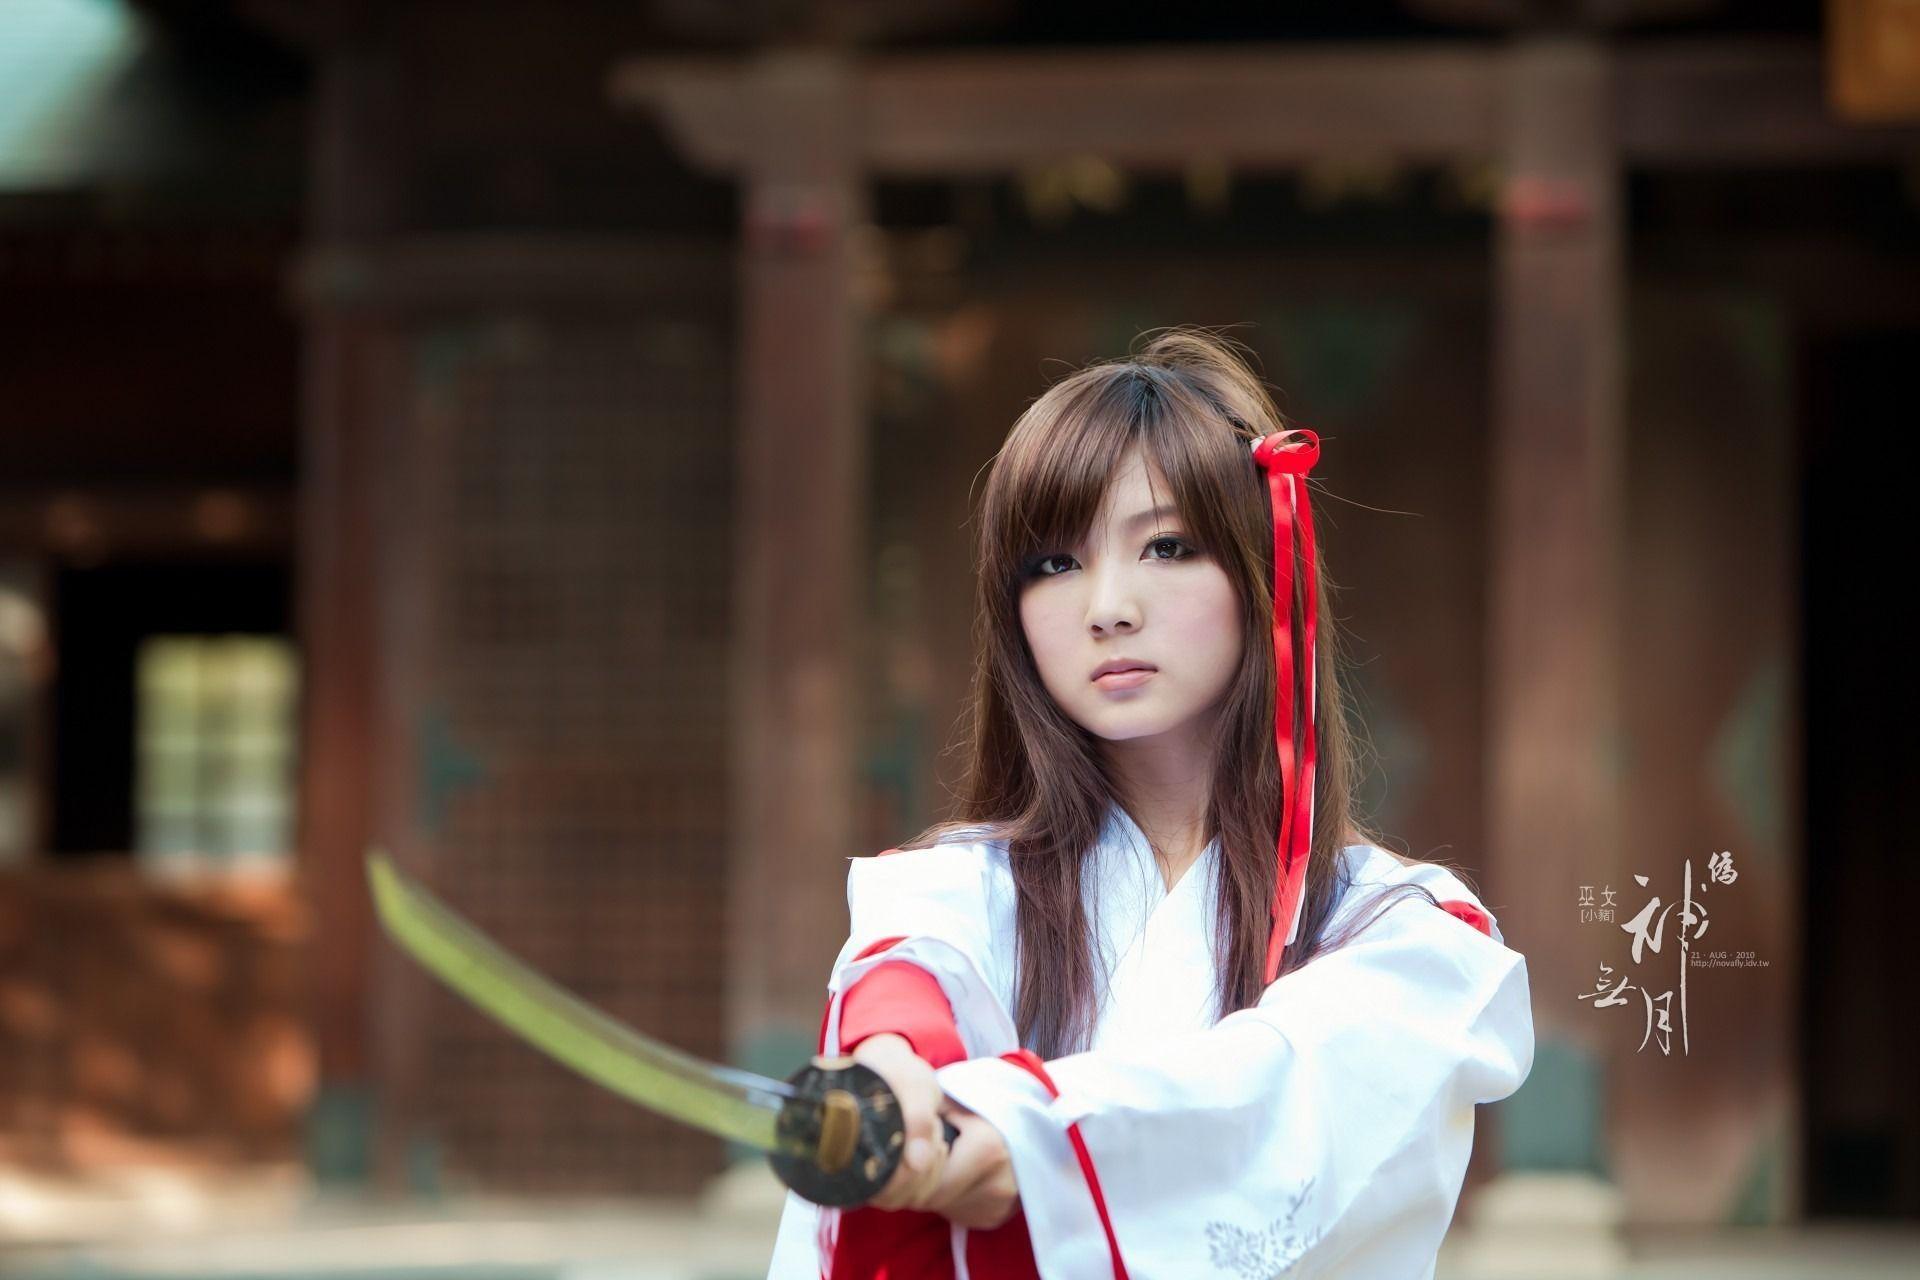 Japanese wallpaper, girl, sword in picture